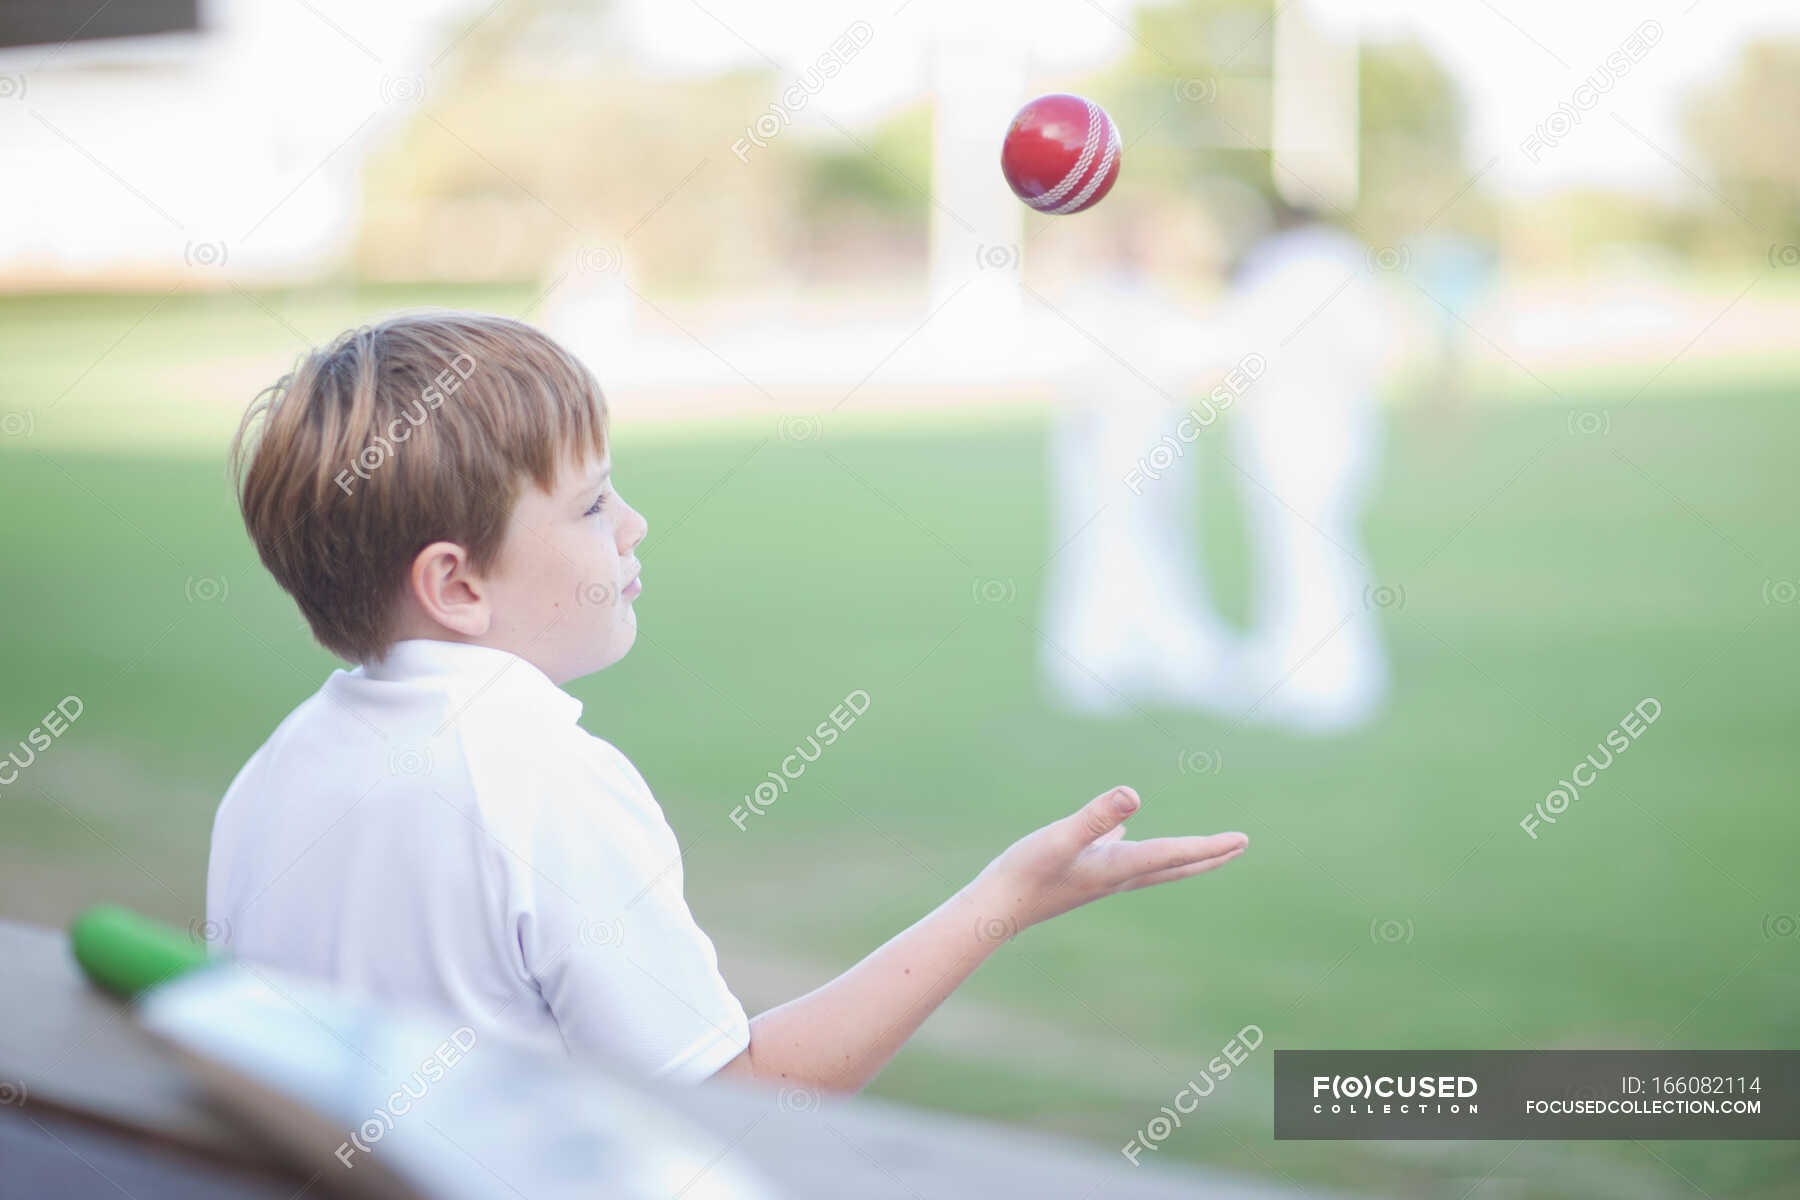 child catching a ball